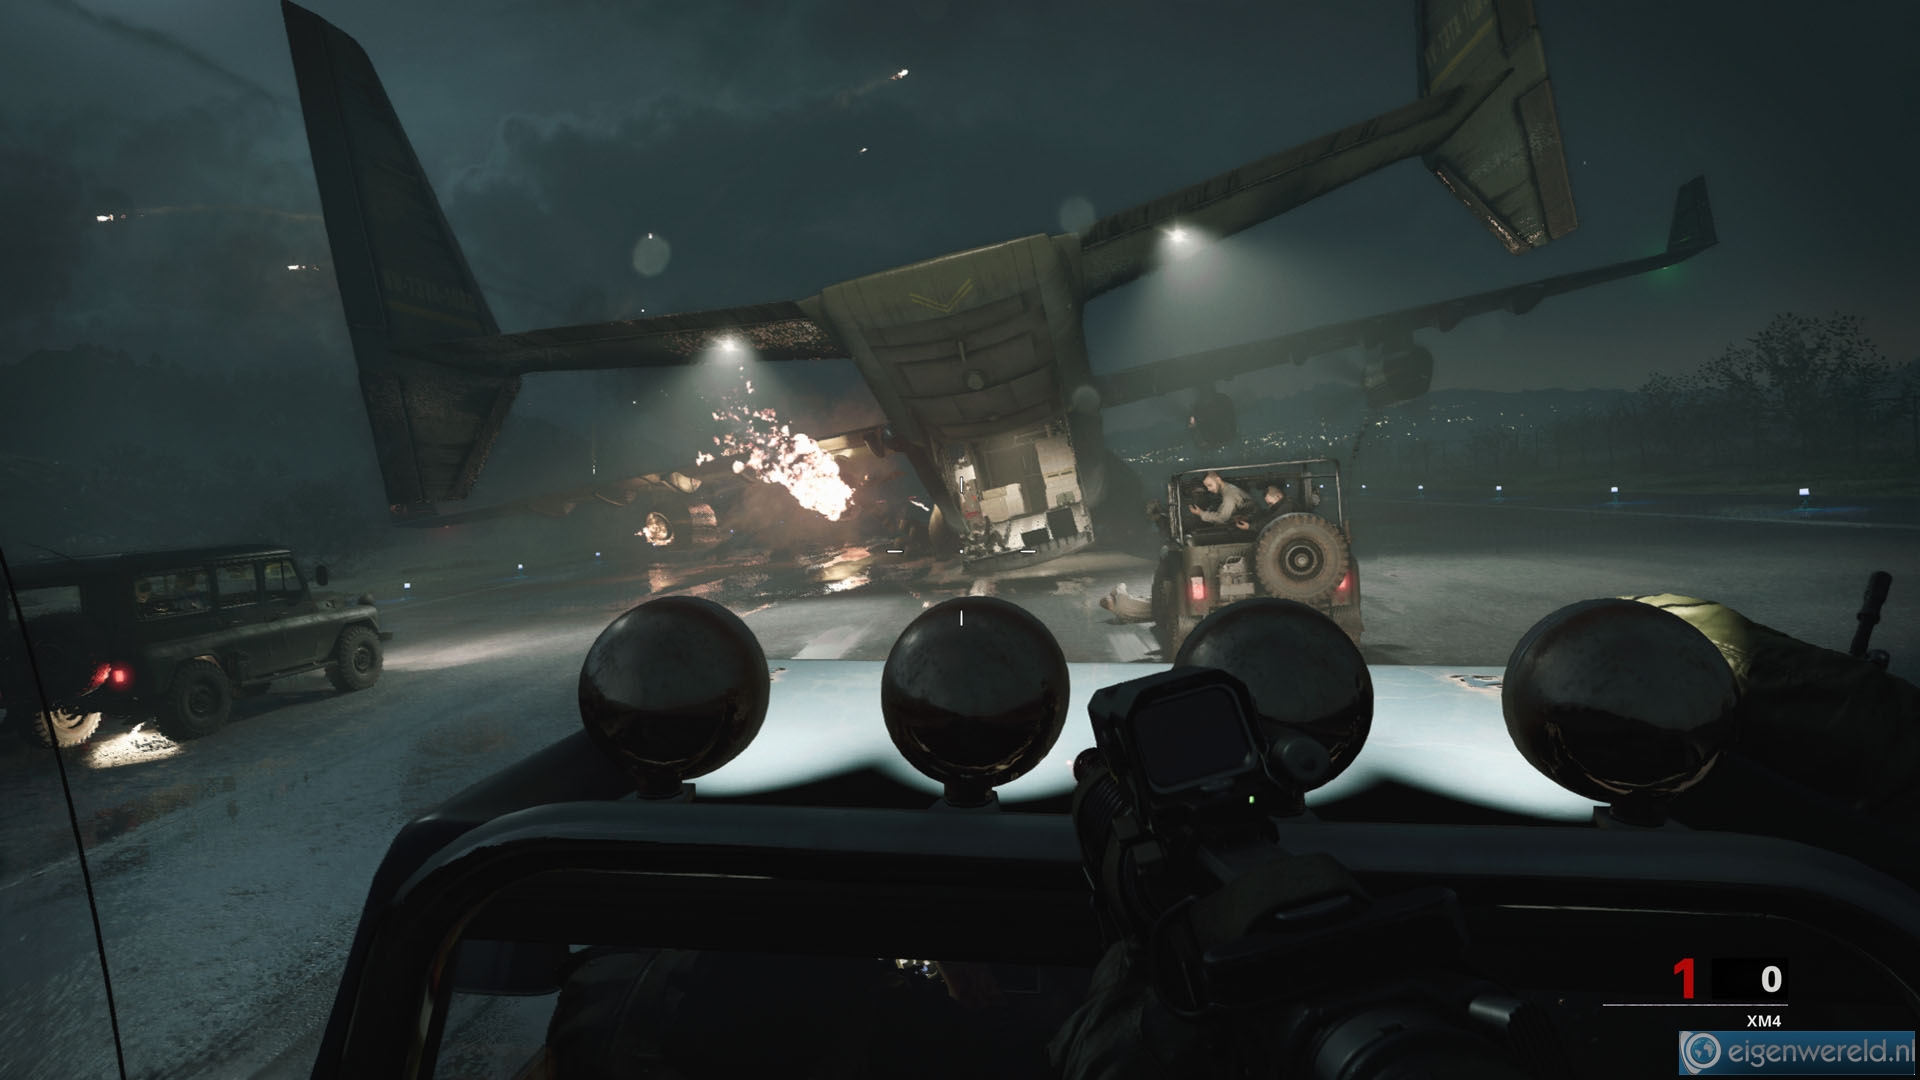 Screenshot van Call Of Duty: Black Ops Cold War